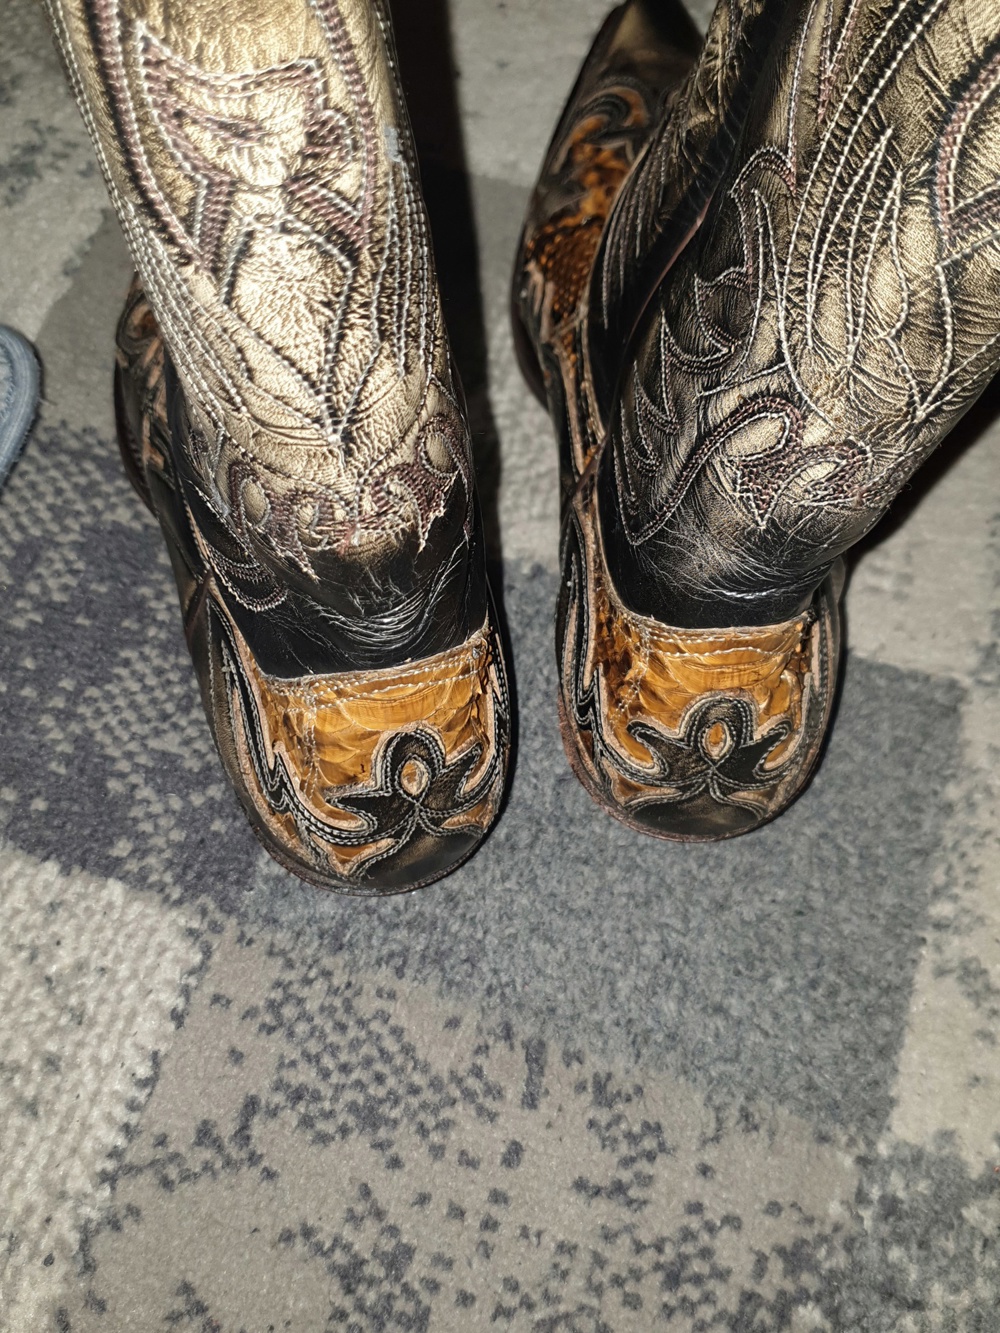 Sendra boots